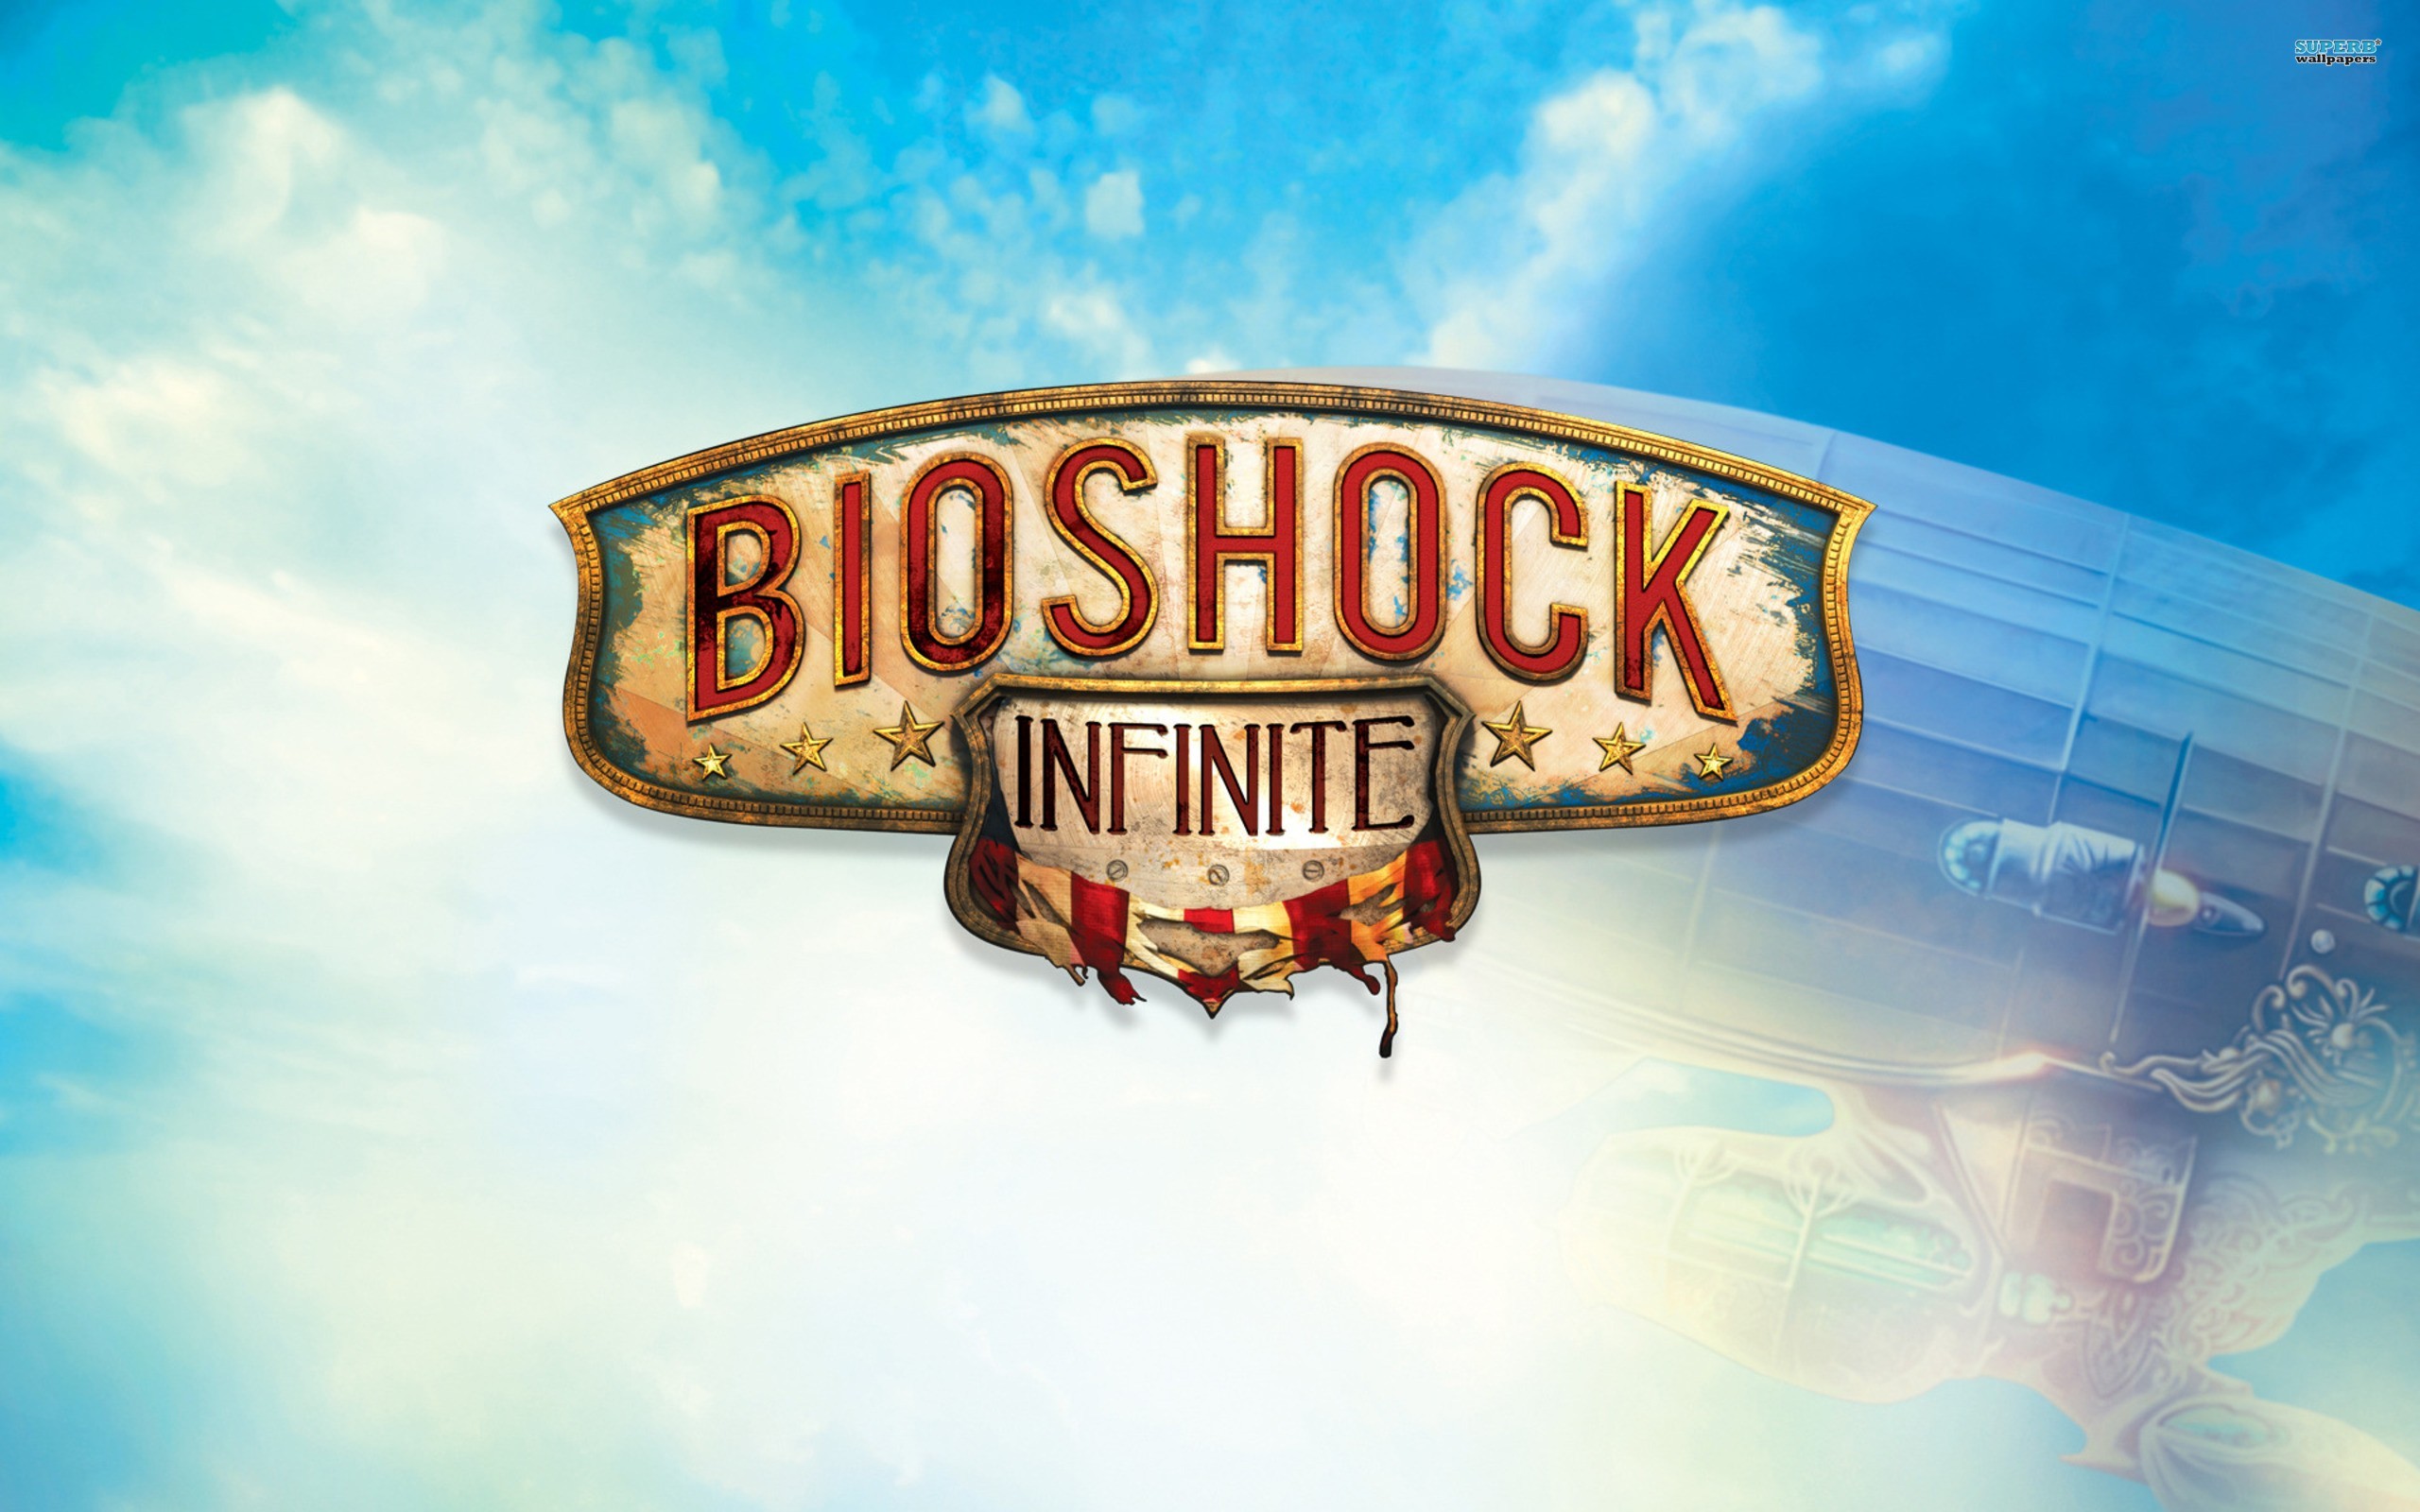 bioshock infinite images